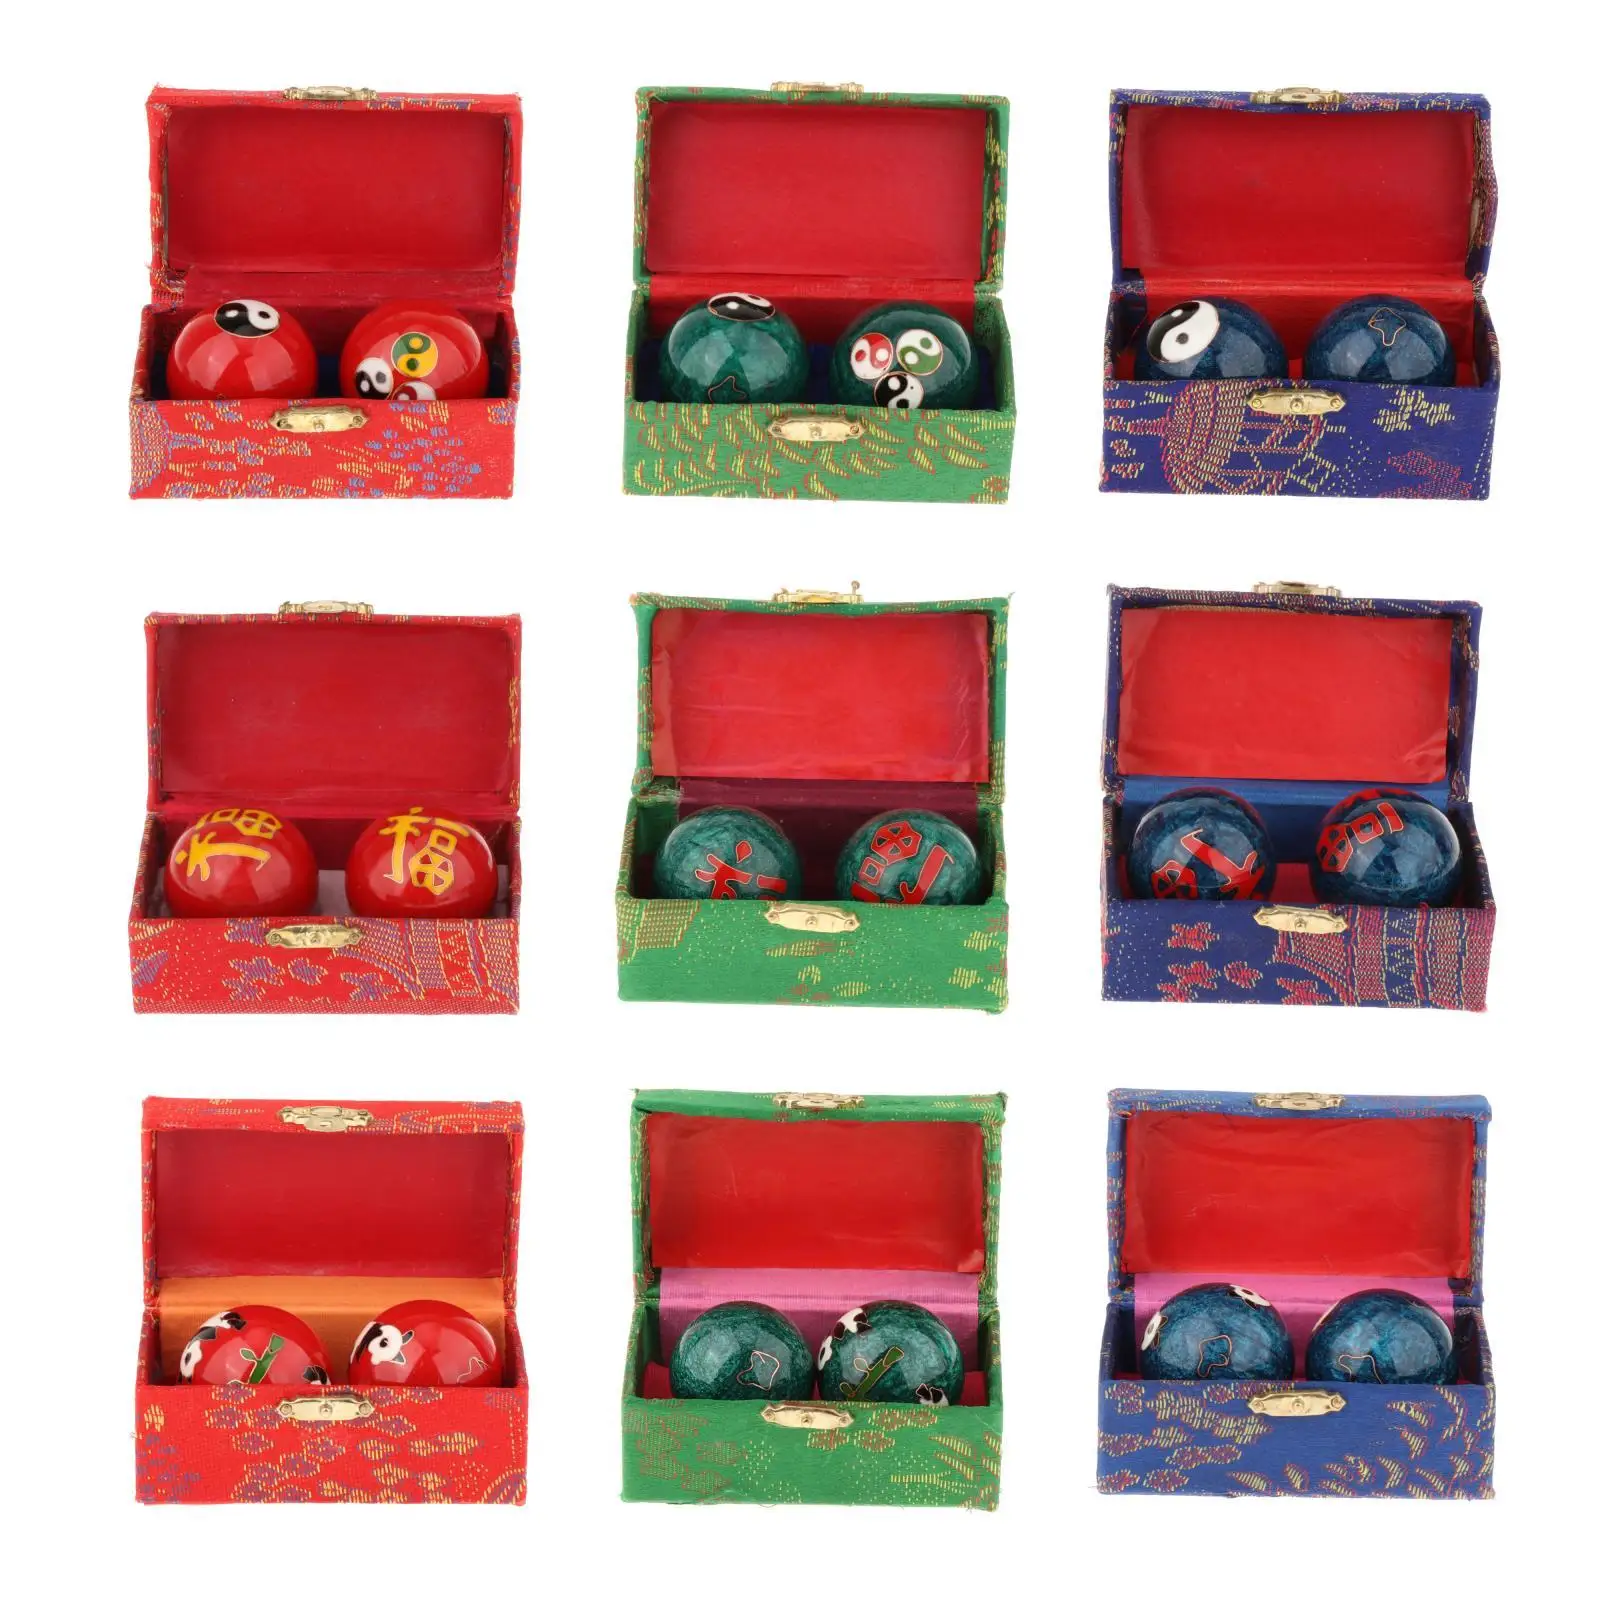 2x Massage Balls with Storage Box Portable Reusable Chinese Health Balls Chinese Baoding Balls for Parents Seniors Elderly